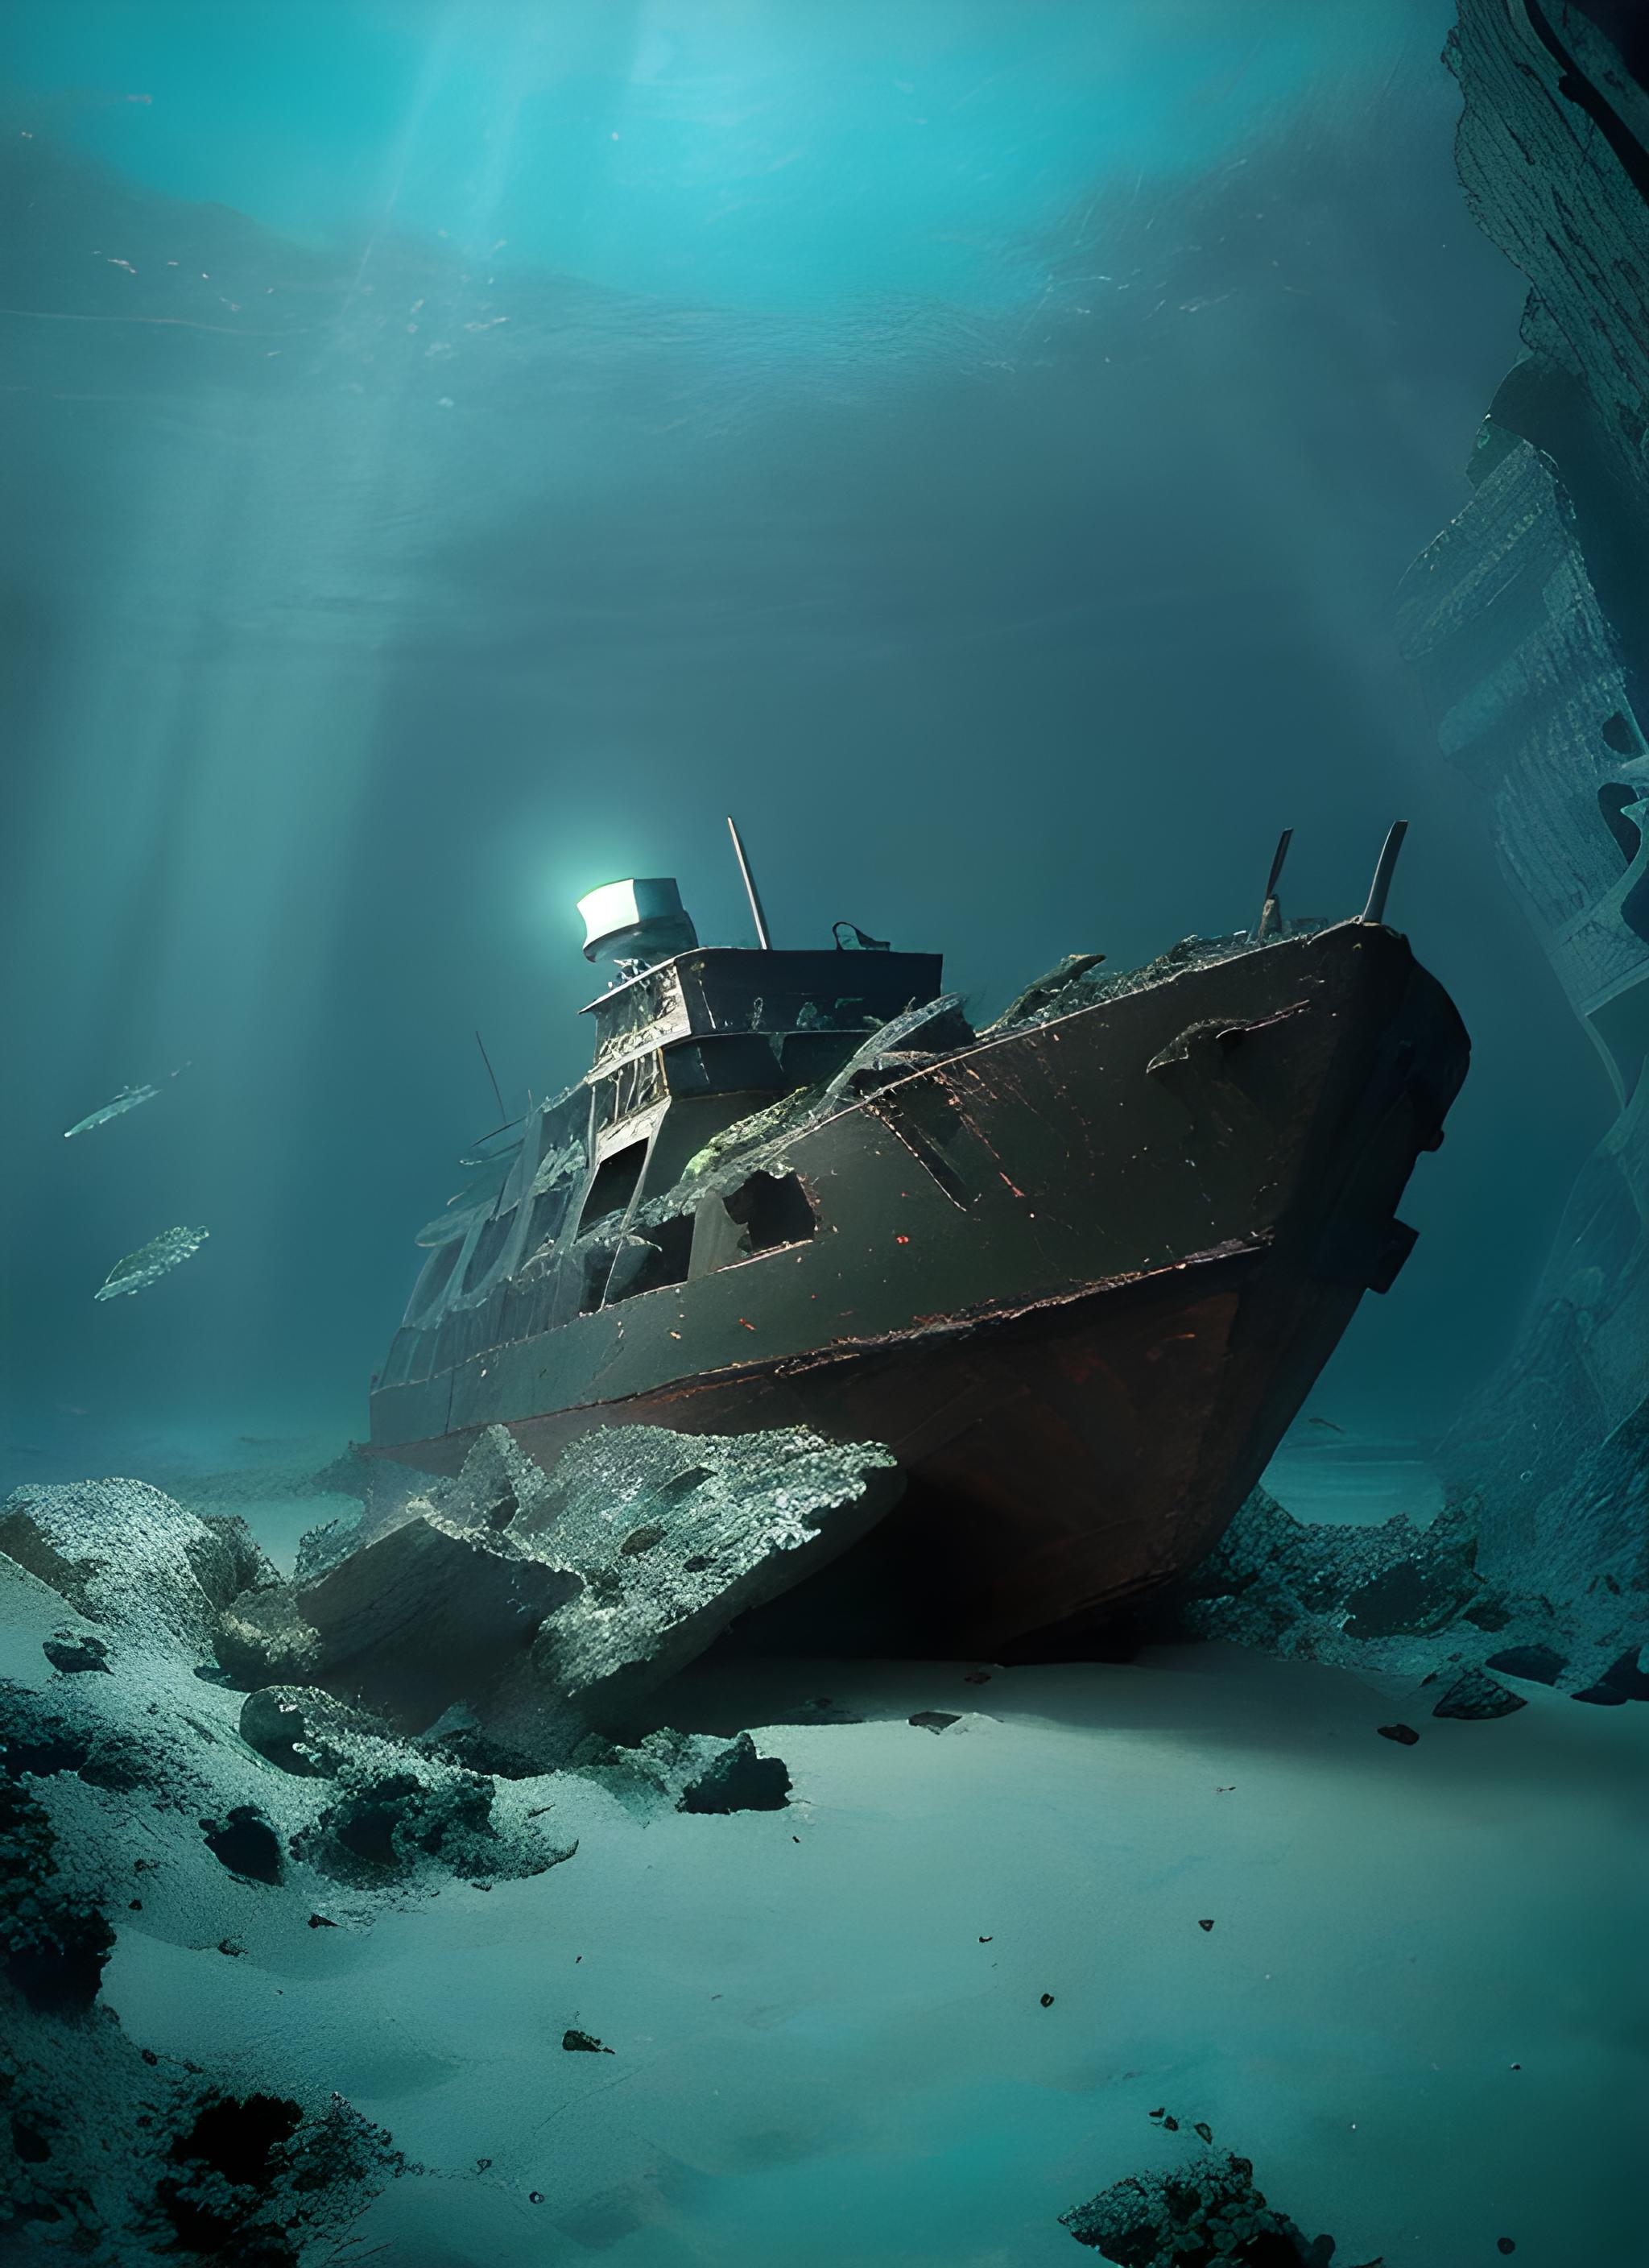 Underwater image by anigroove